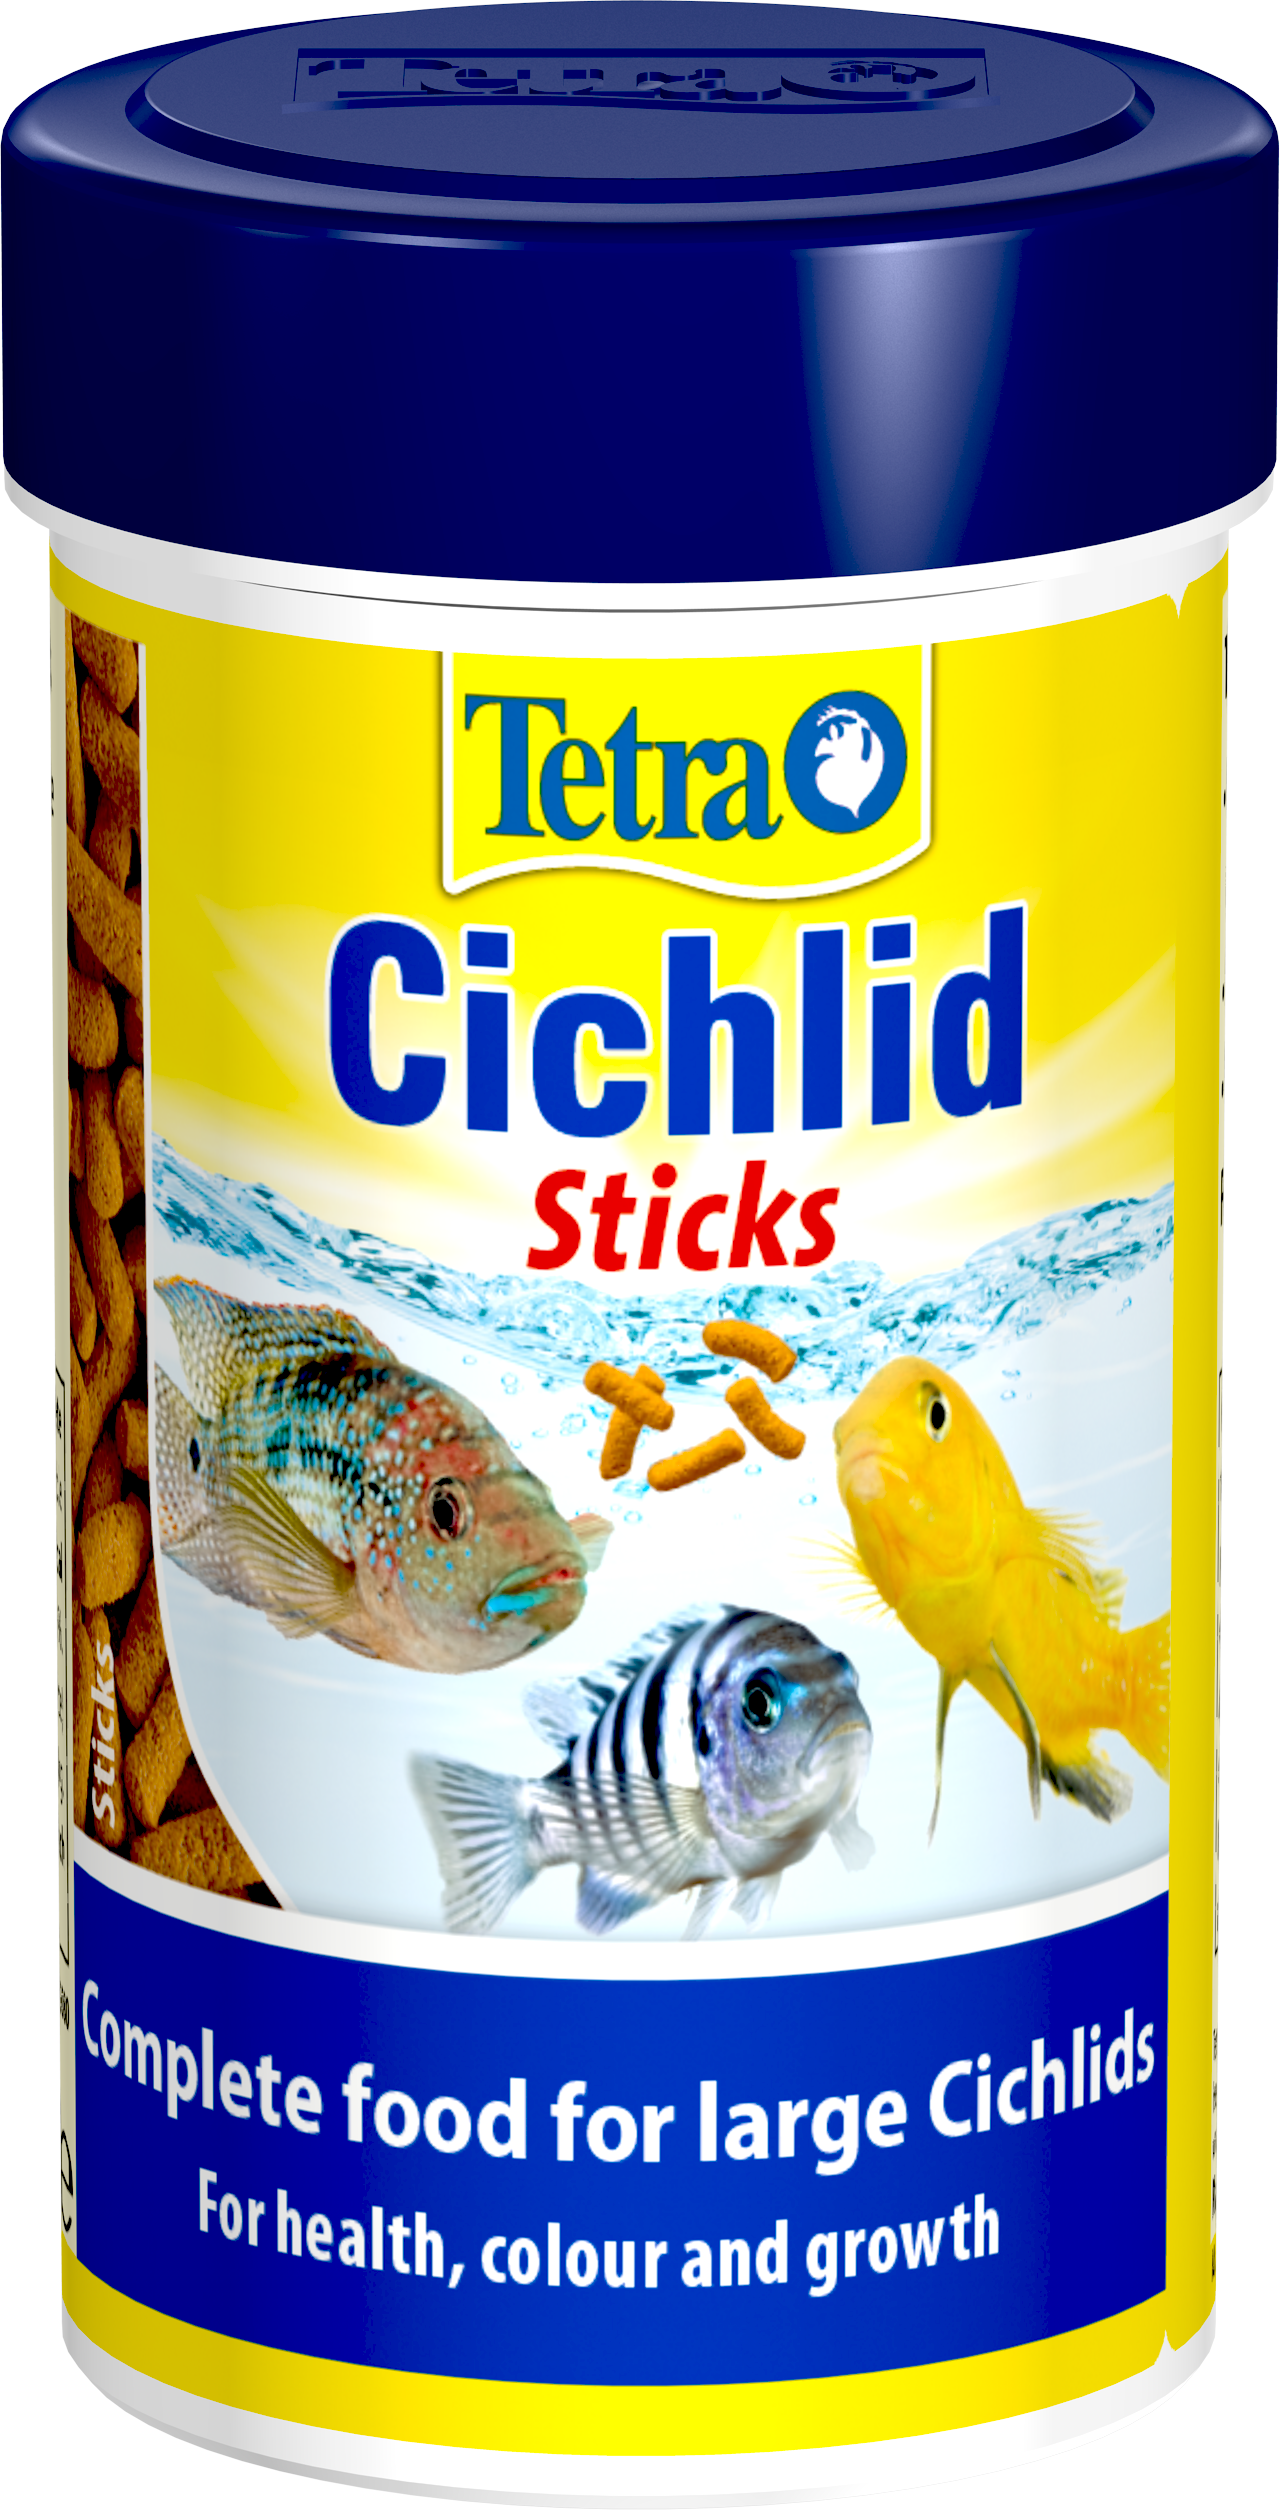 Tetra Cichlid Sticks: Tetra